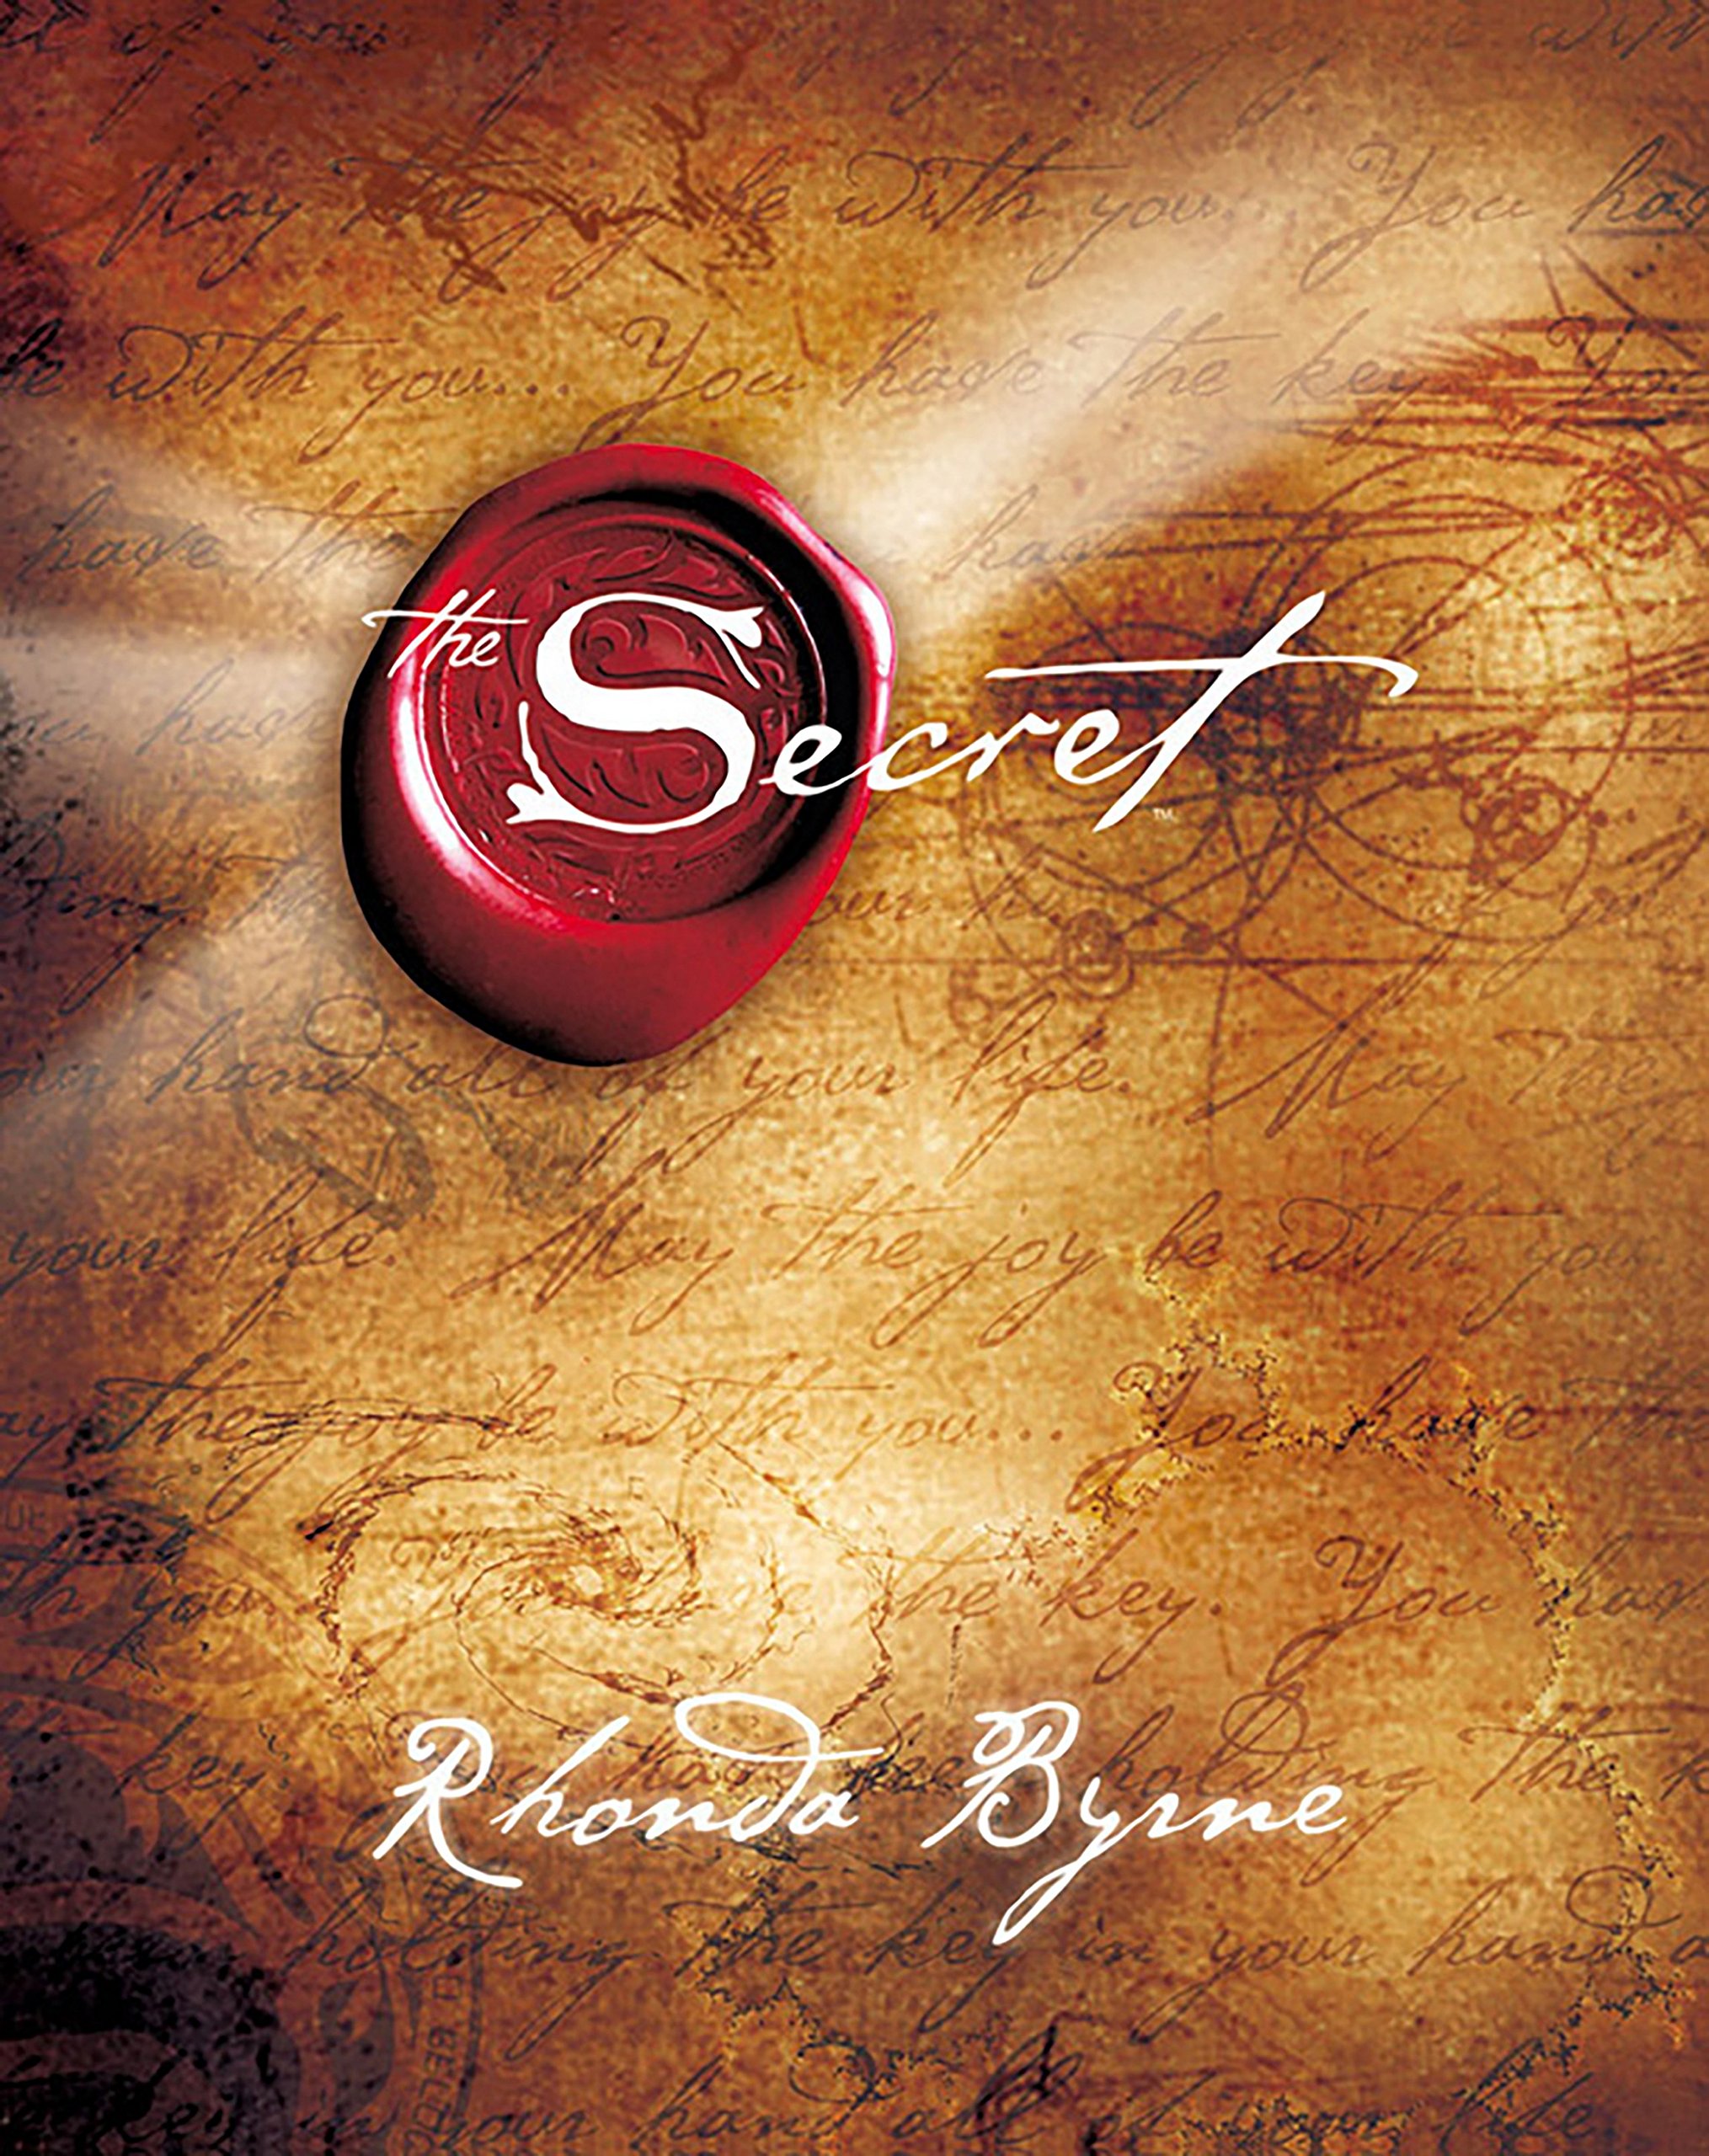 The Secret Book by Rhonda Byrne